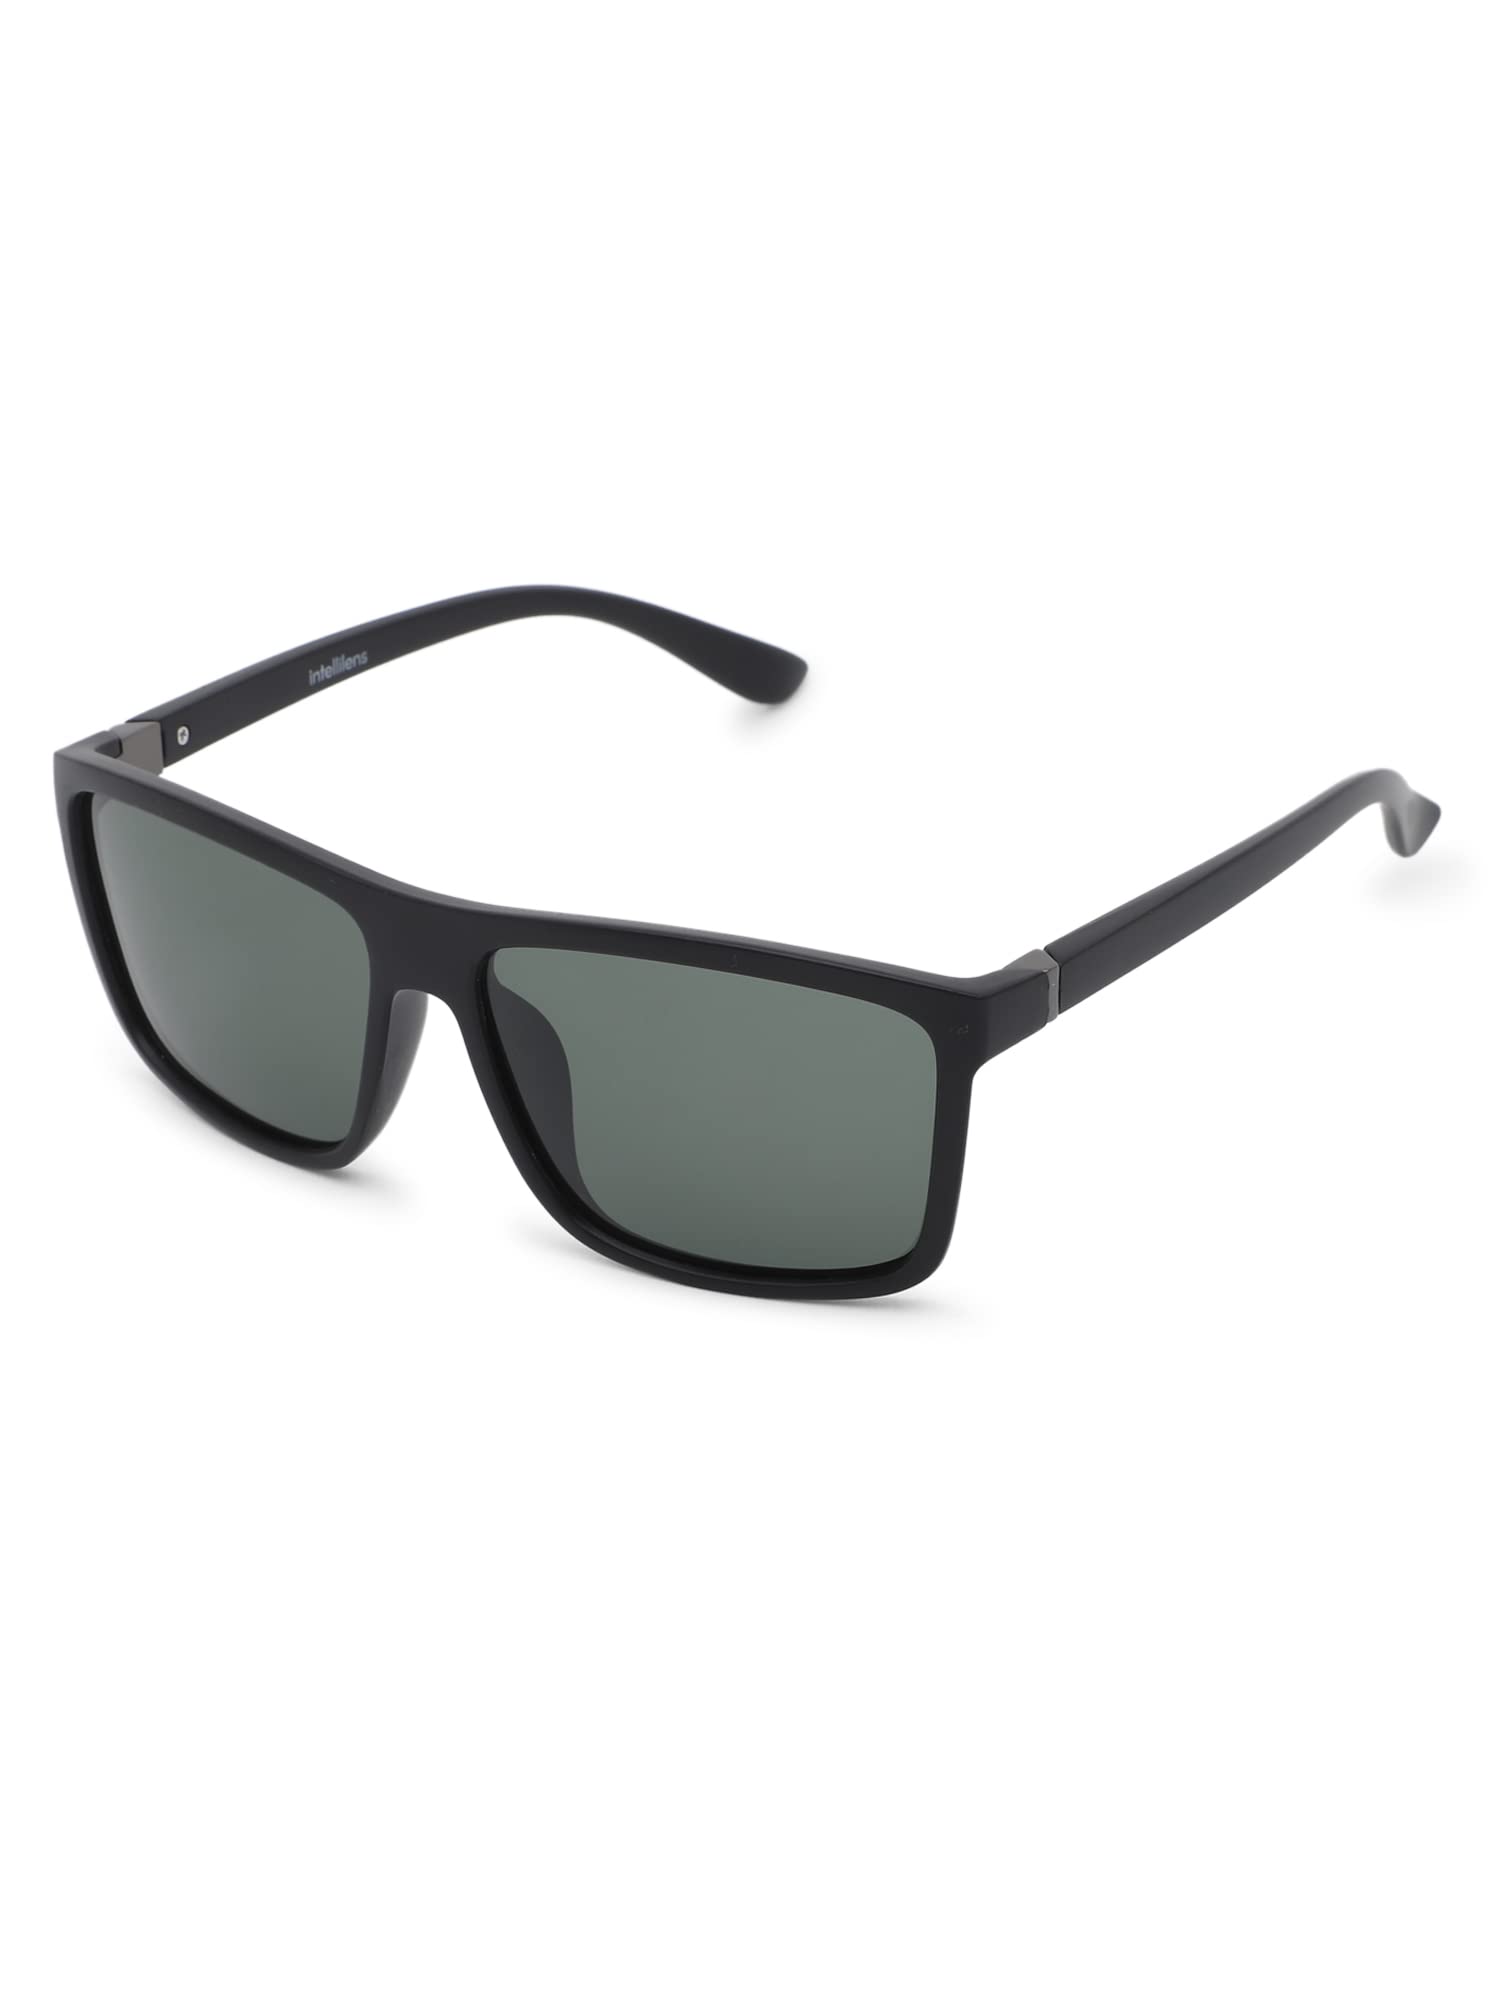 Intellilens Square Polarized & UV Protected Sunglasses For Men & Women